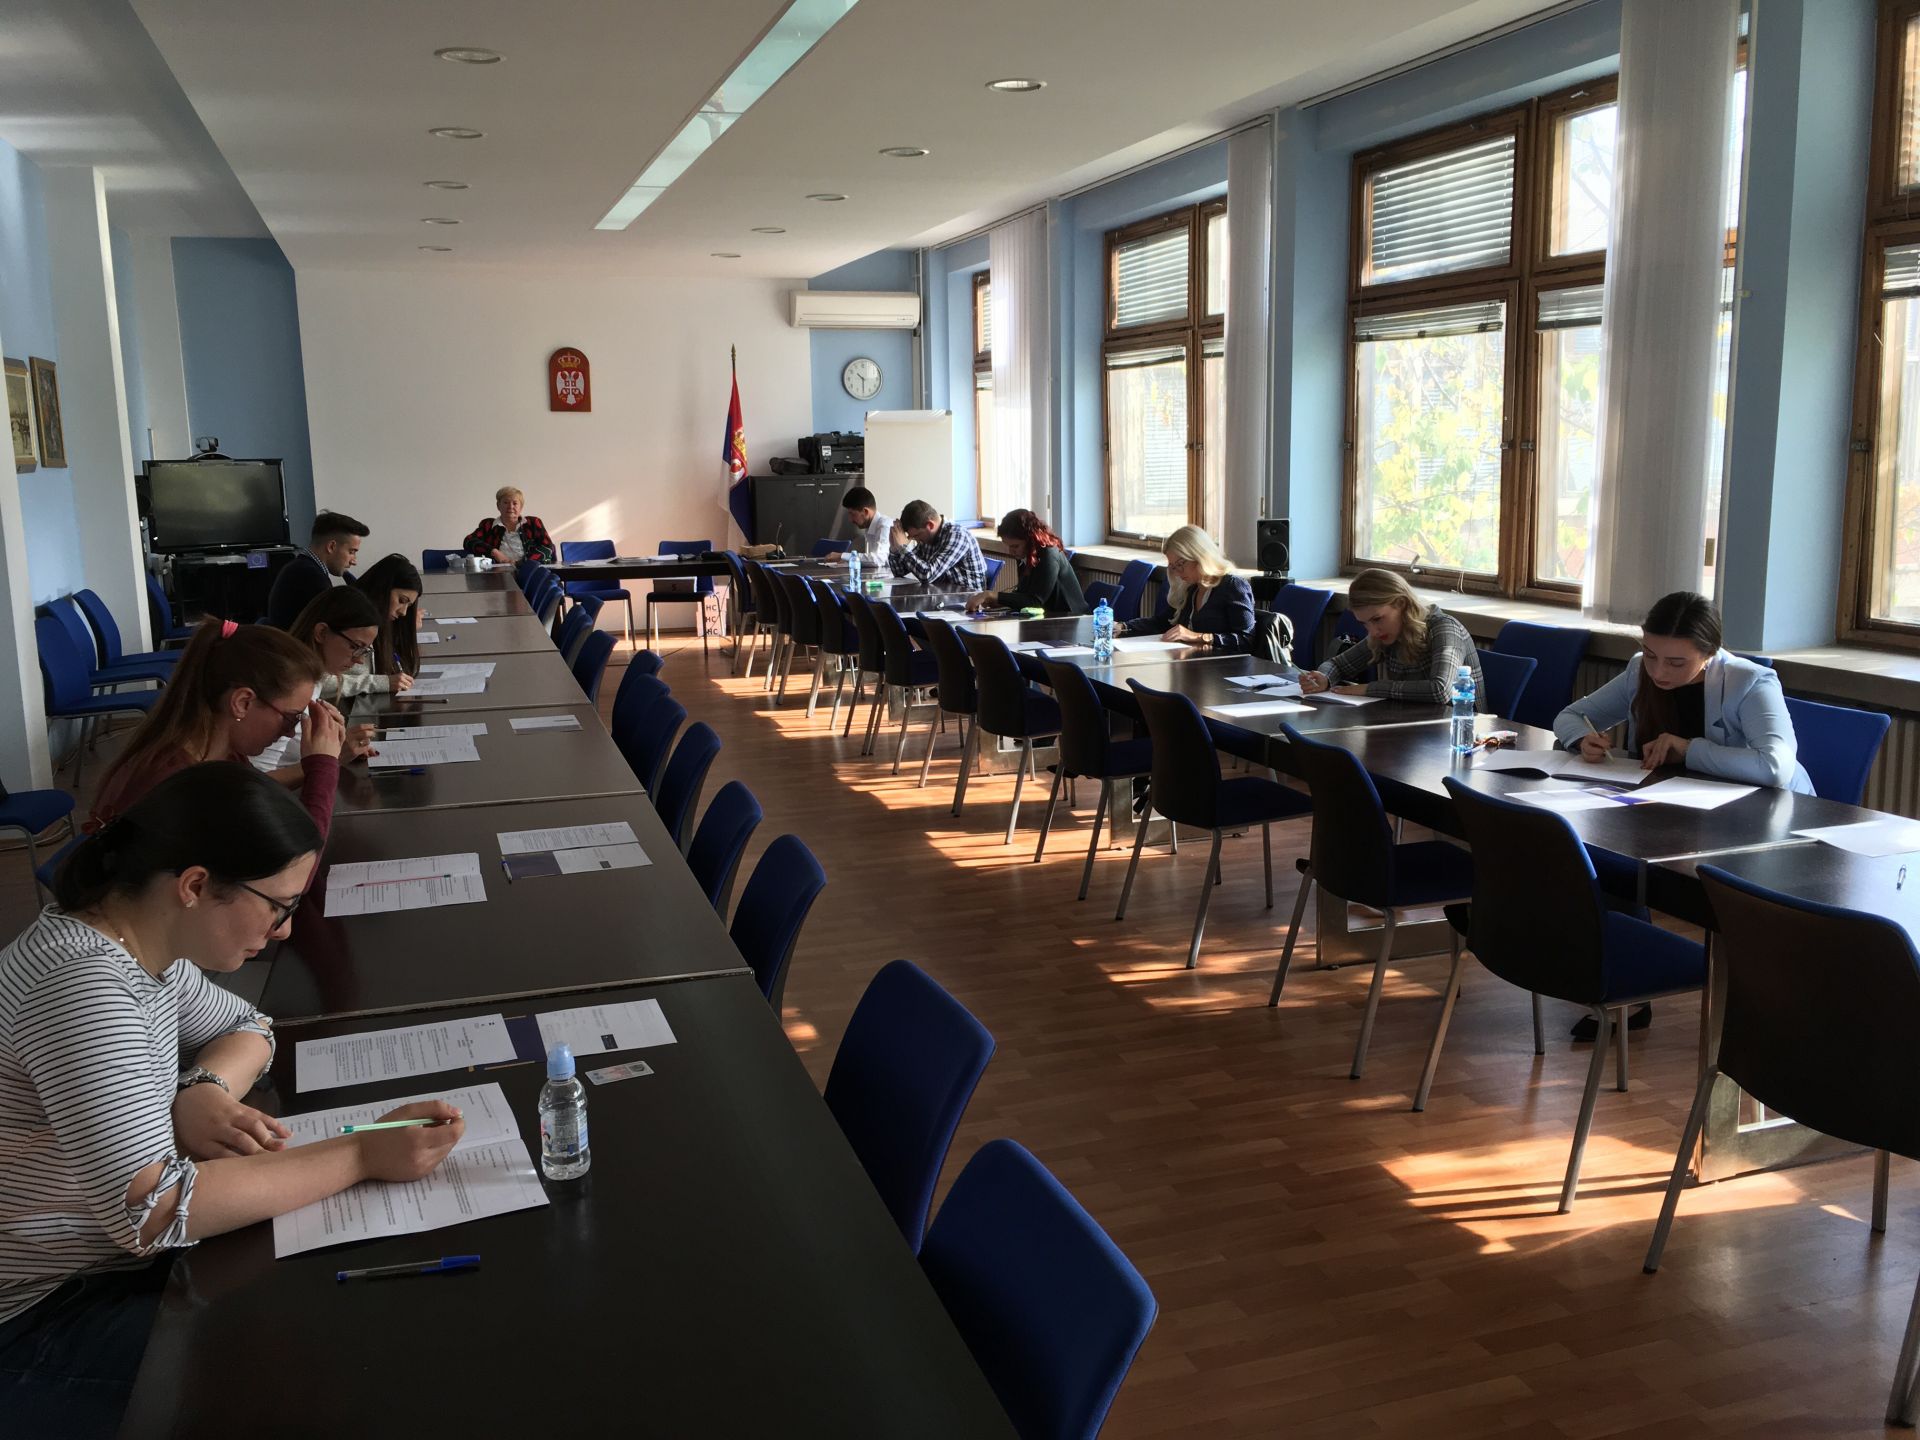 From passing the 9th generation entrance exam - Novi Sad